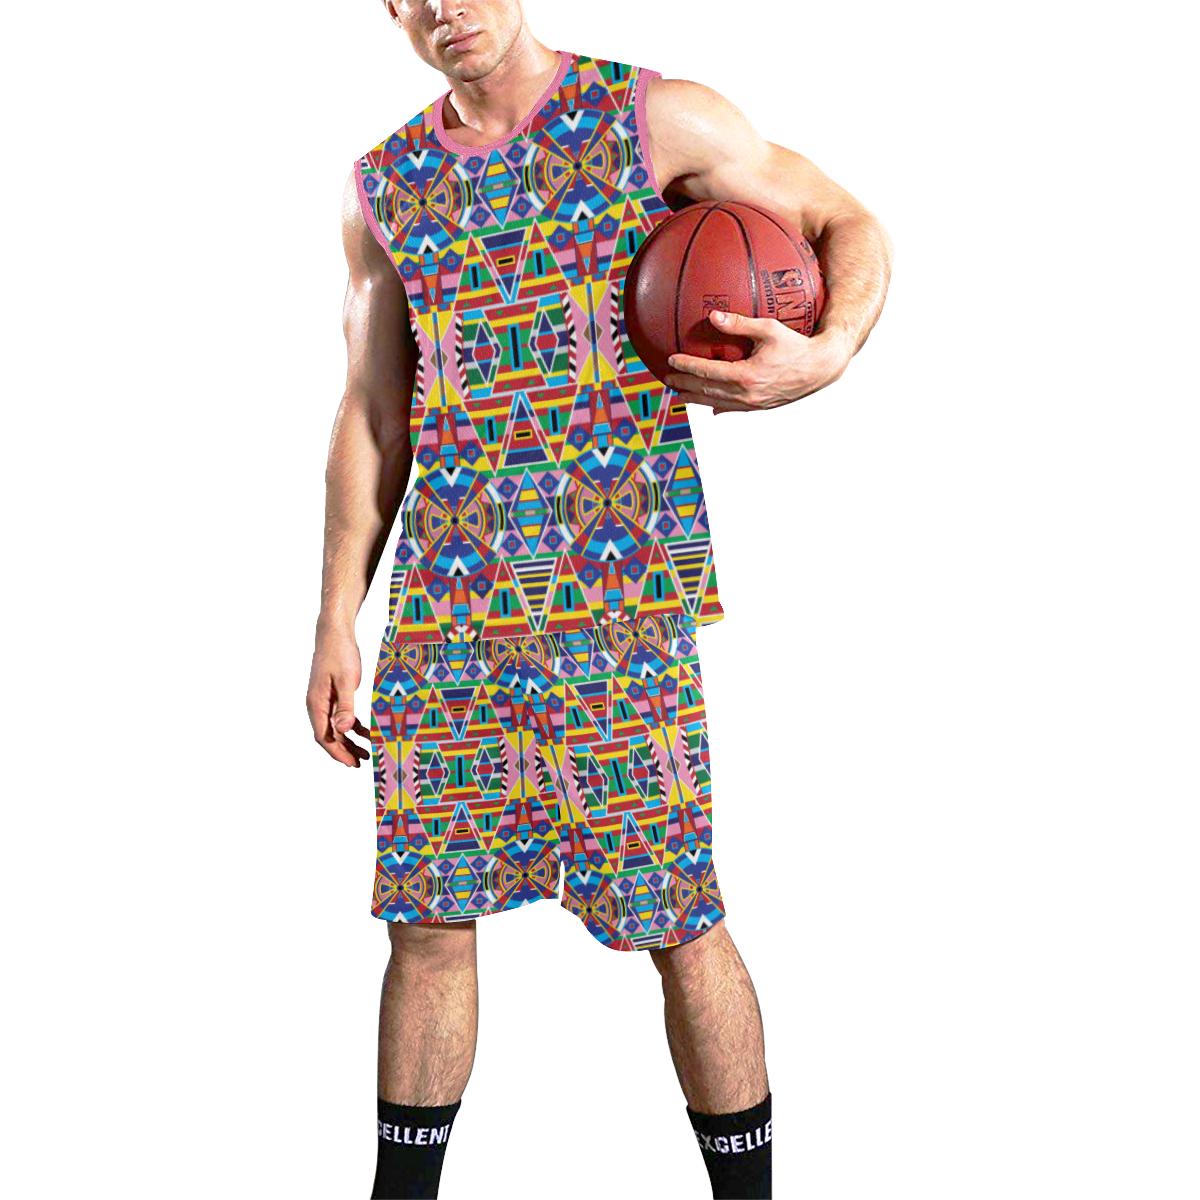 Crow Captive All Over Print Basketball Uniform Basketball Uniform e-joyer 